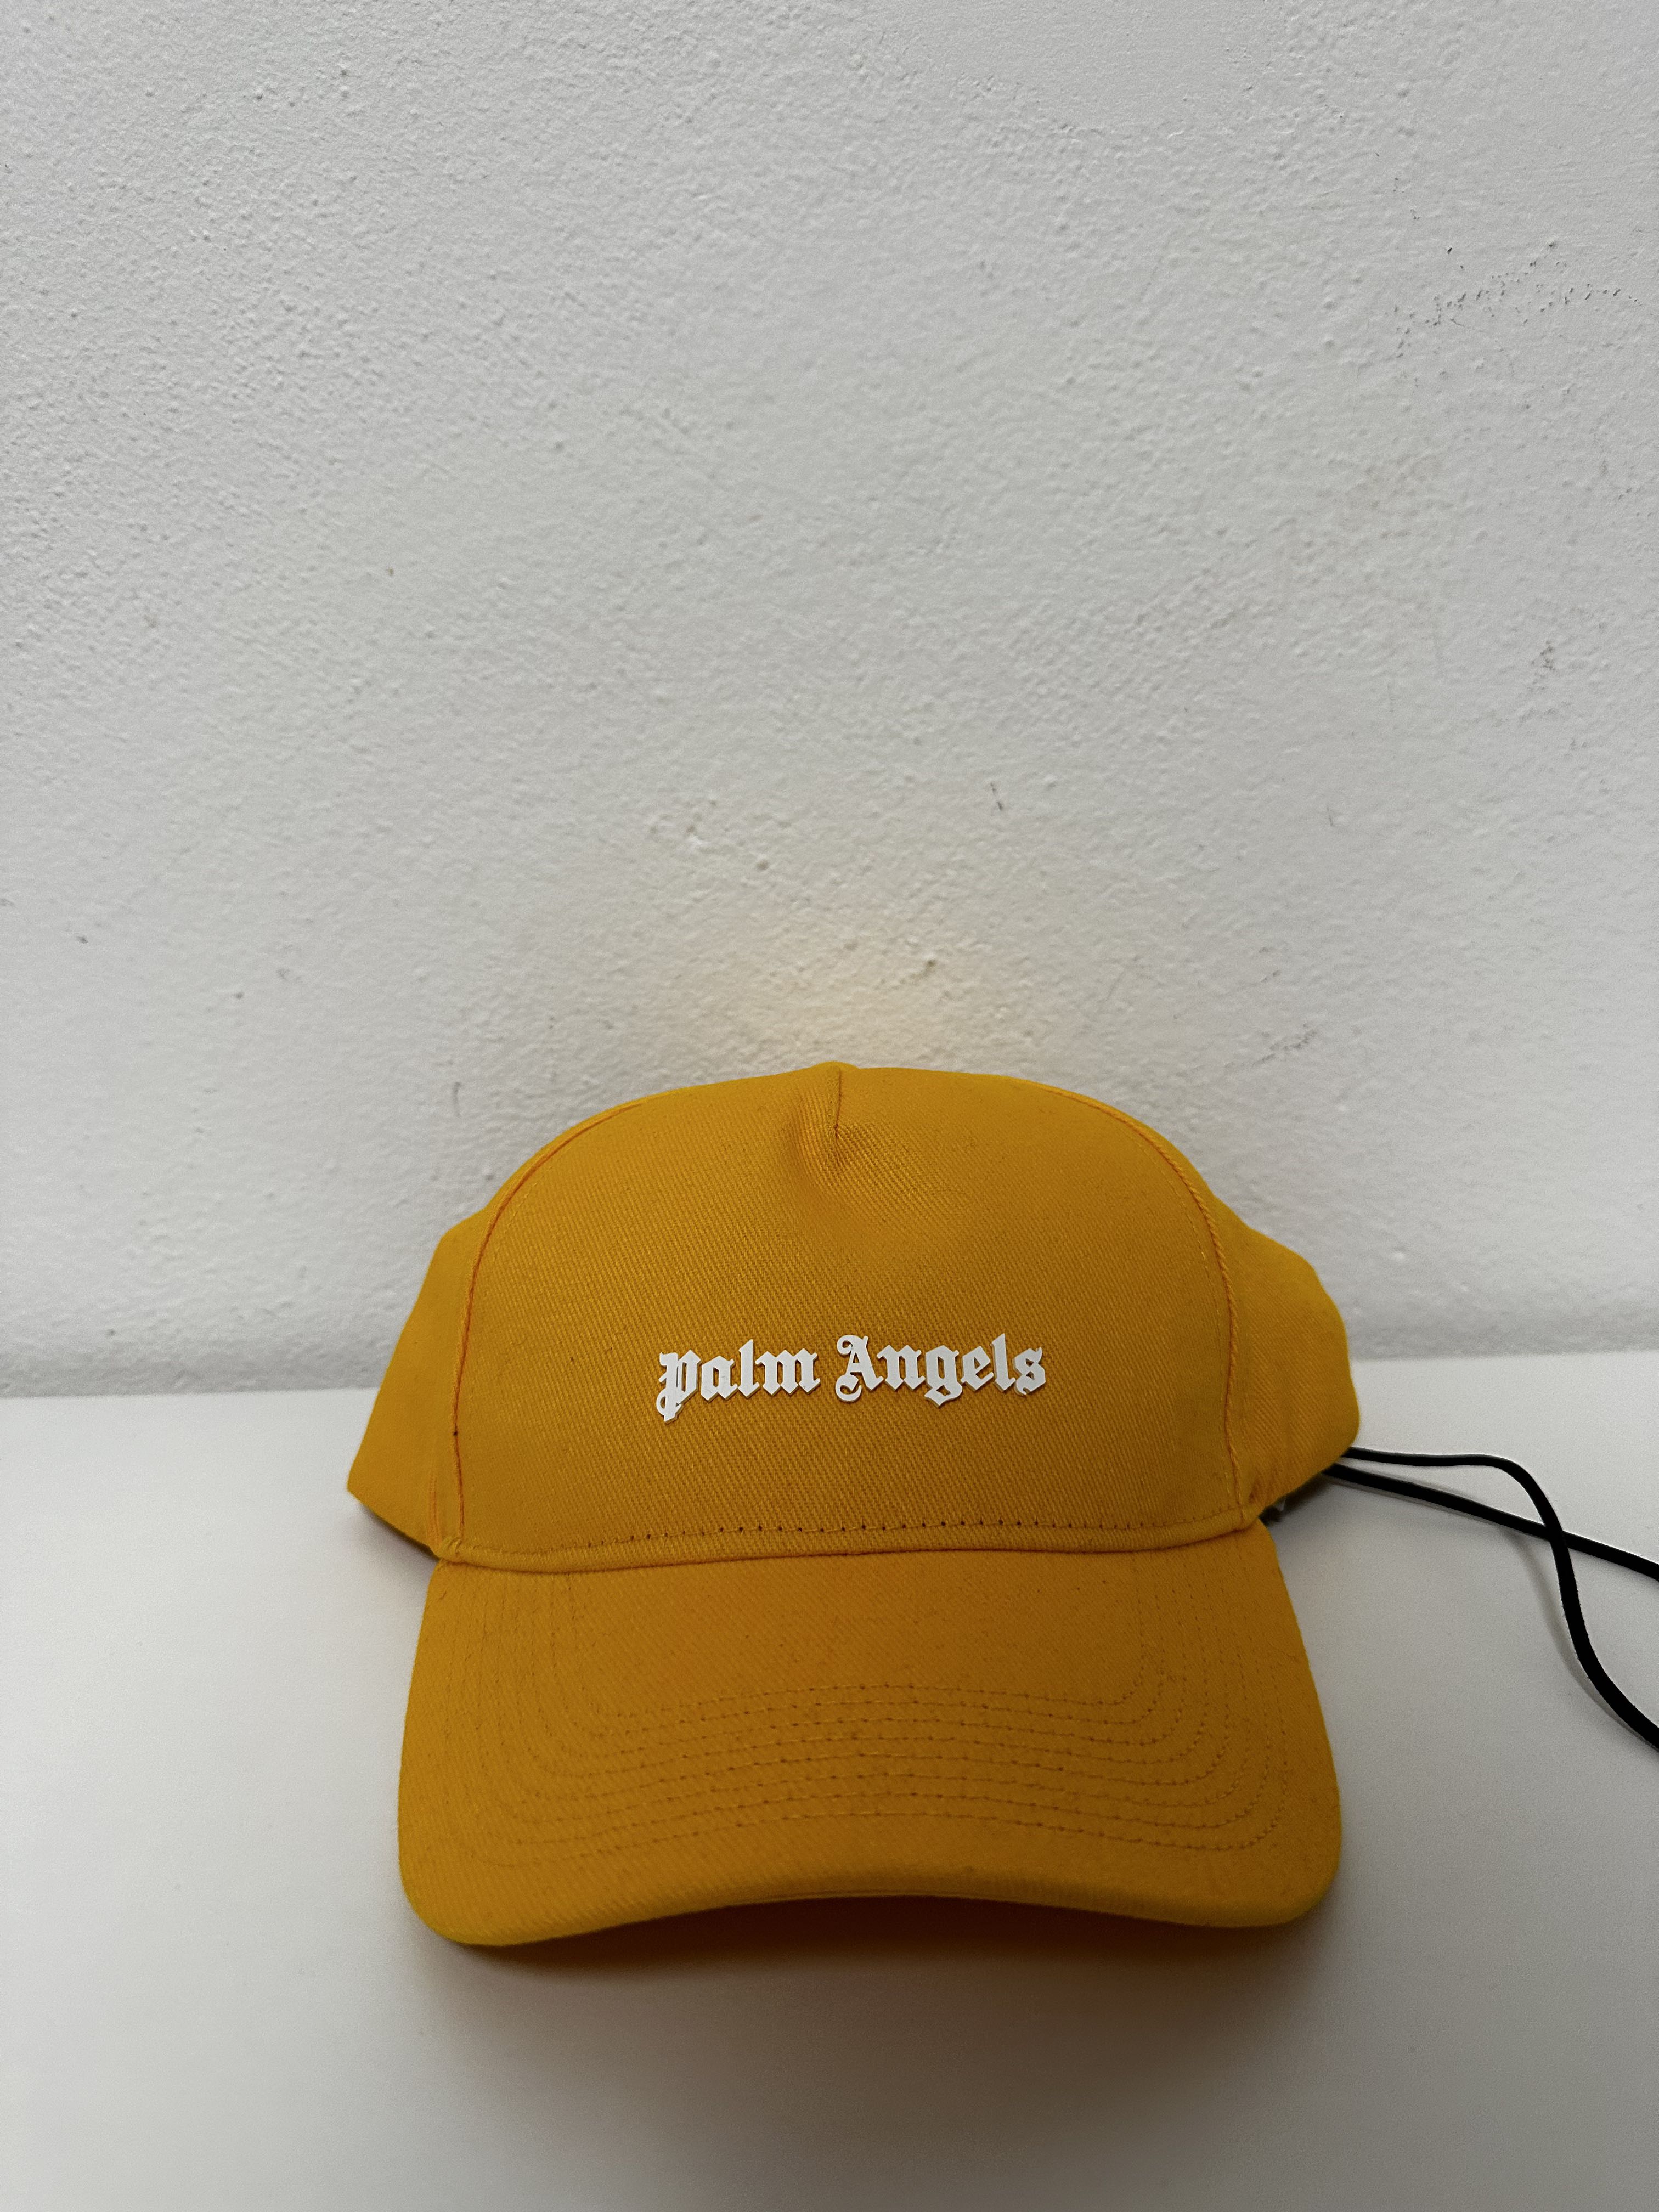 Palm Angels Logo Baseball Cap - 1